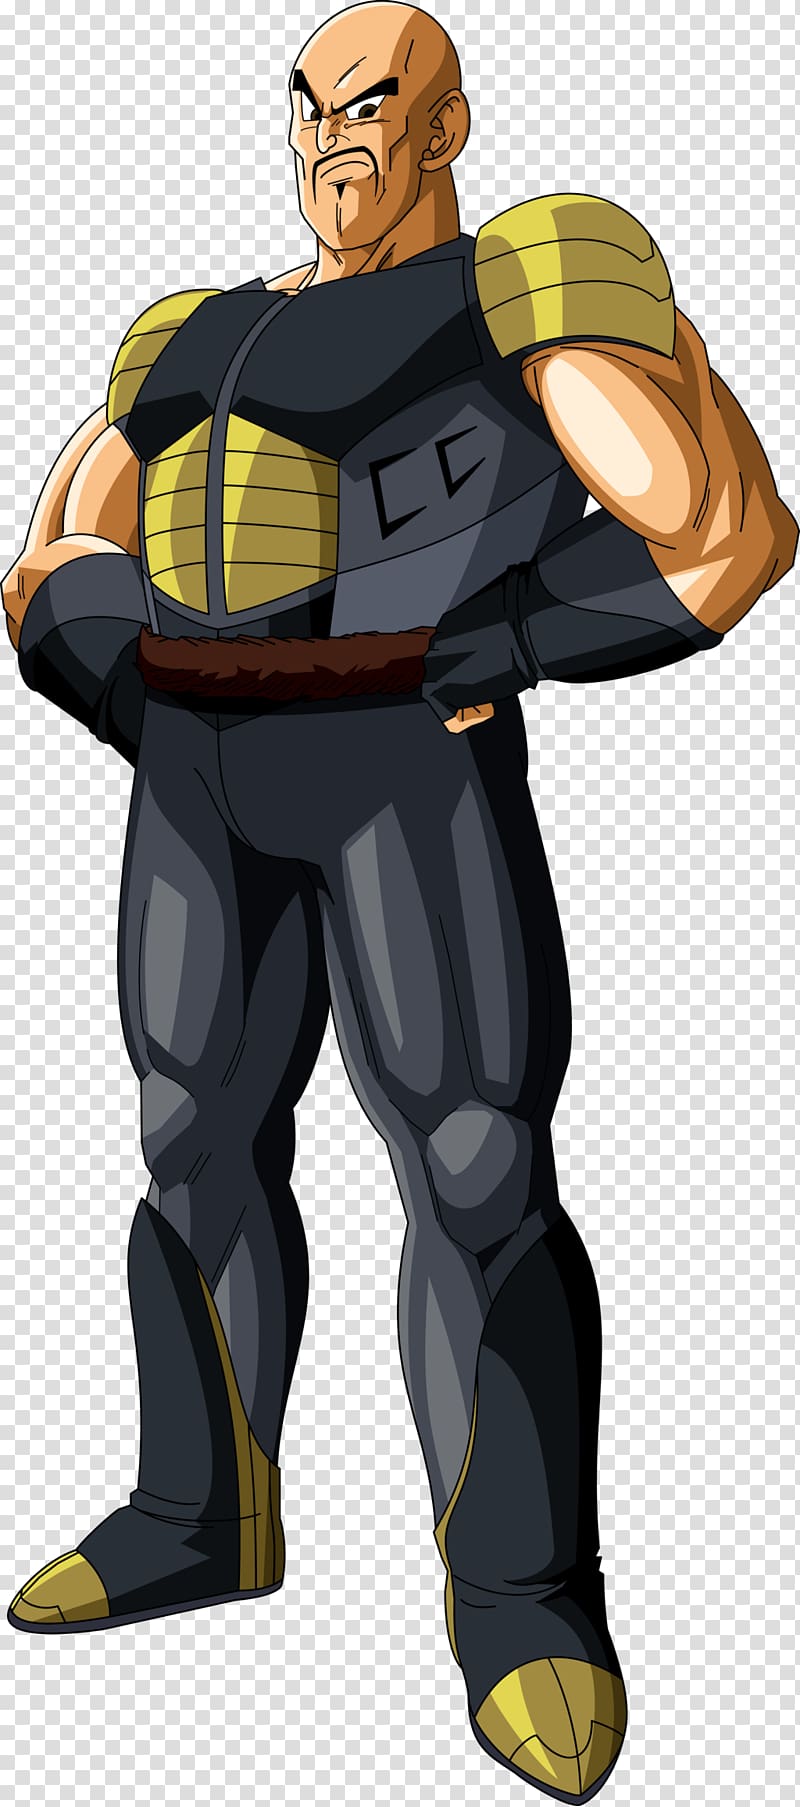 Nappa Vegeta Goku Frieza Dragon Ball Z: Attack of the Saiyans, armour transparent background PNG clipart